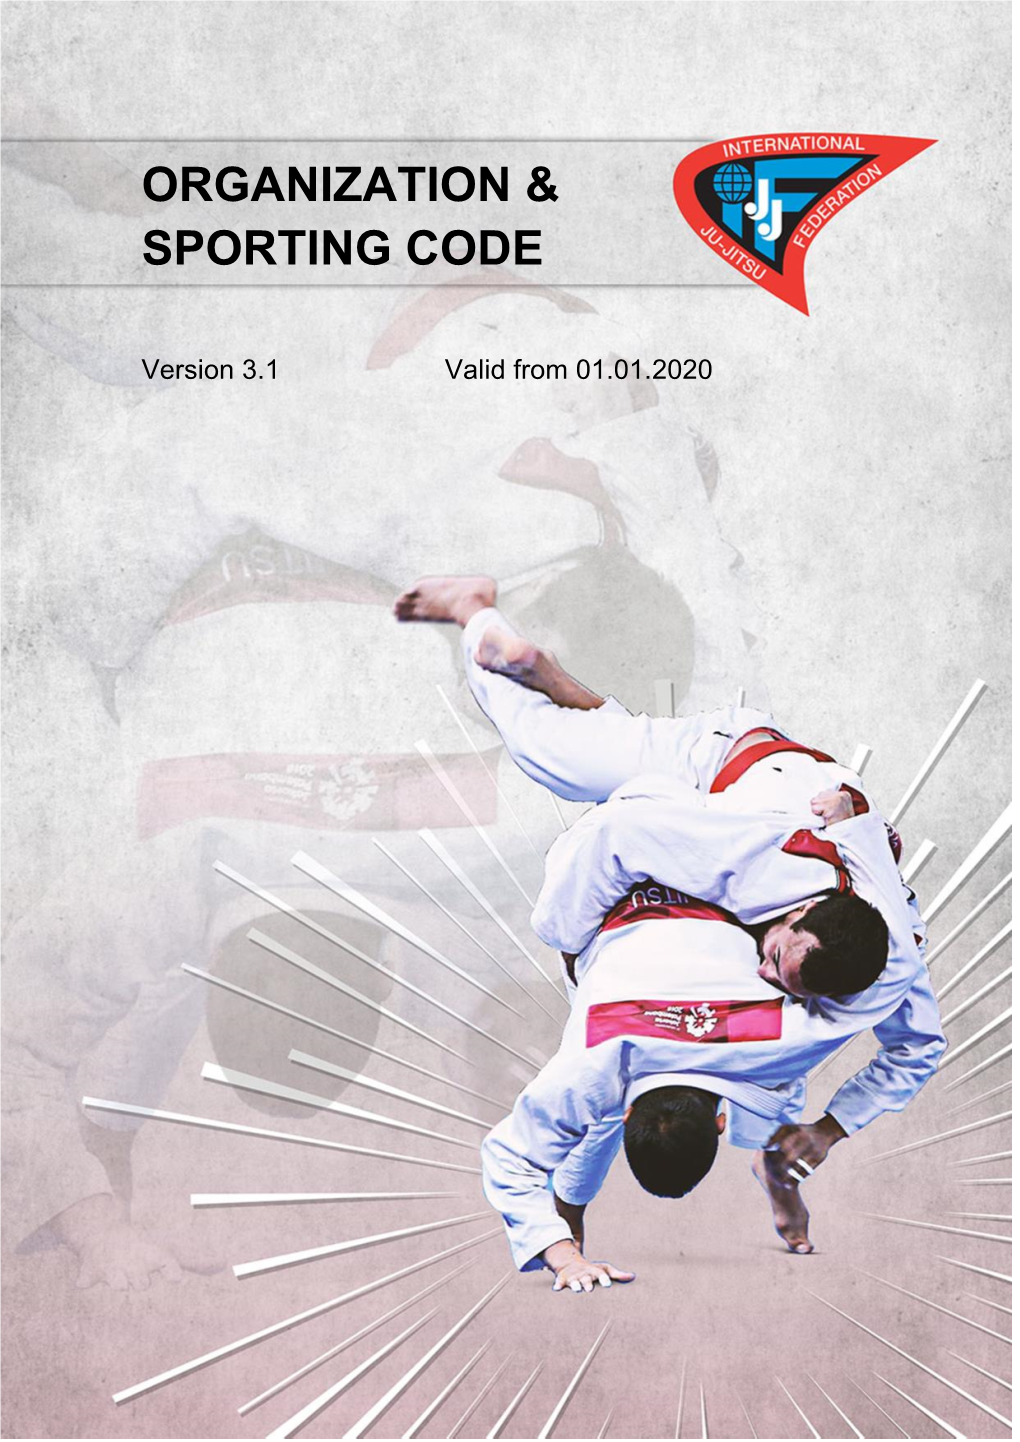 Organization & Sporting Code